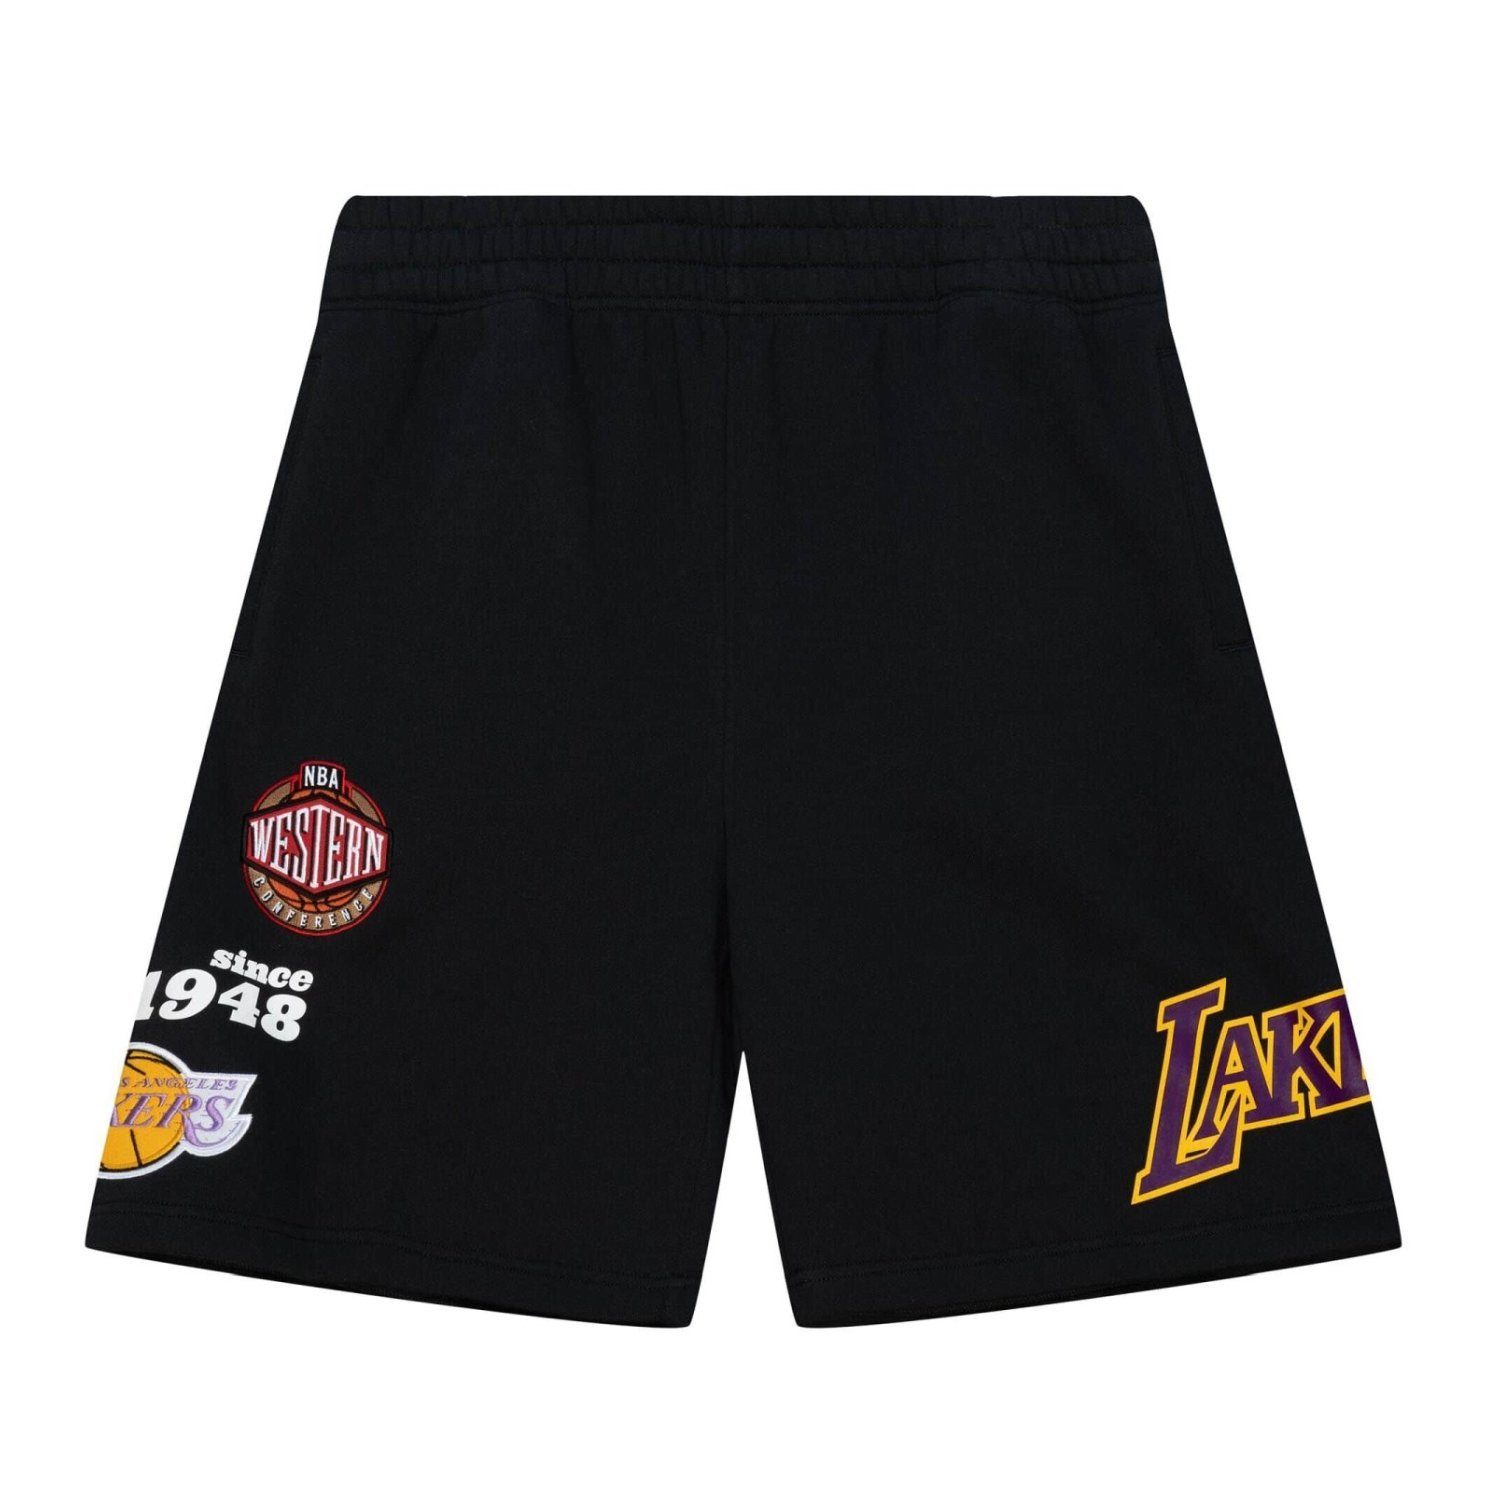 & Ness ORIGINS Mitchell Angeles Lakers TEAM Los Shorts NBA